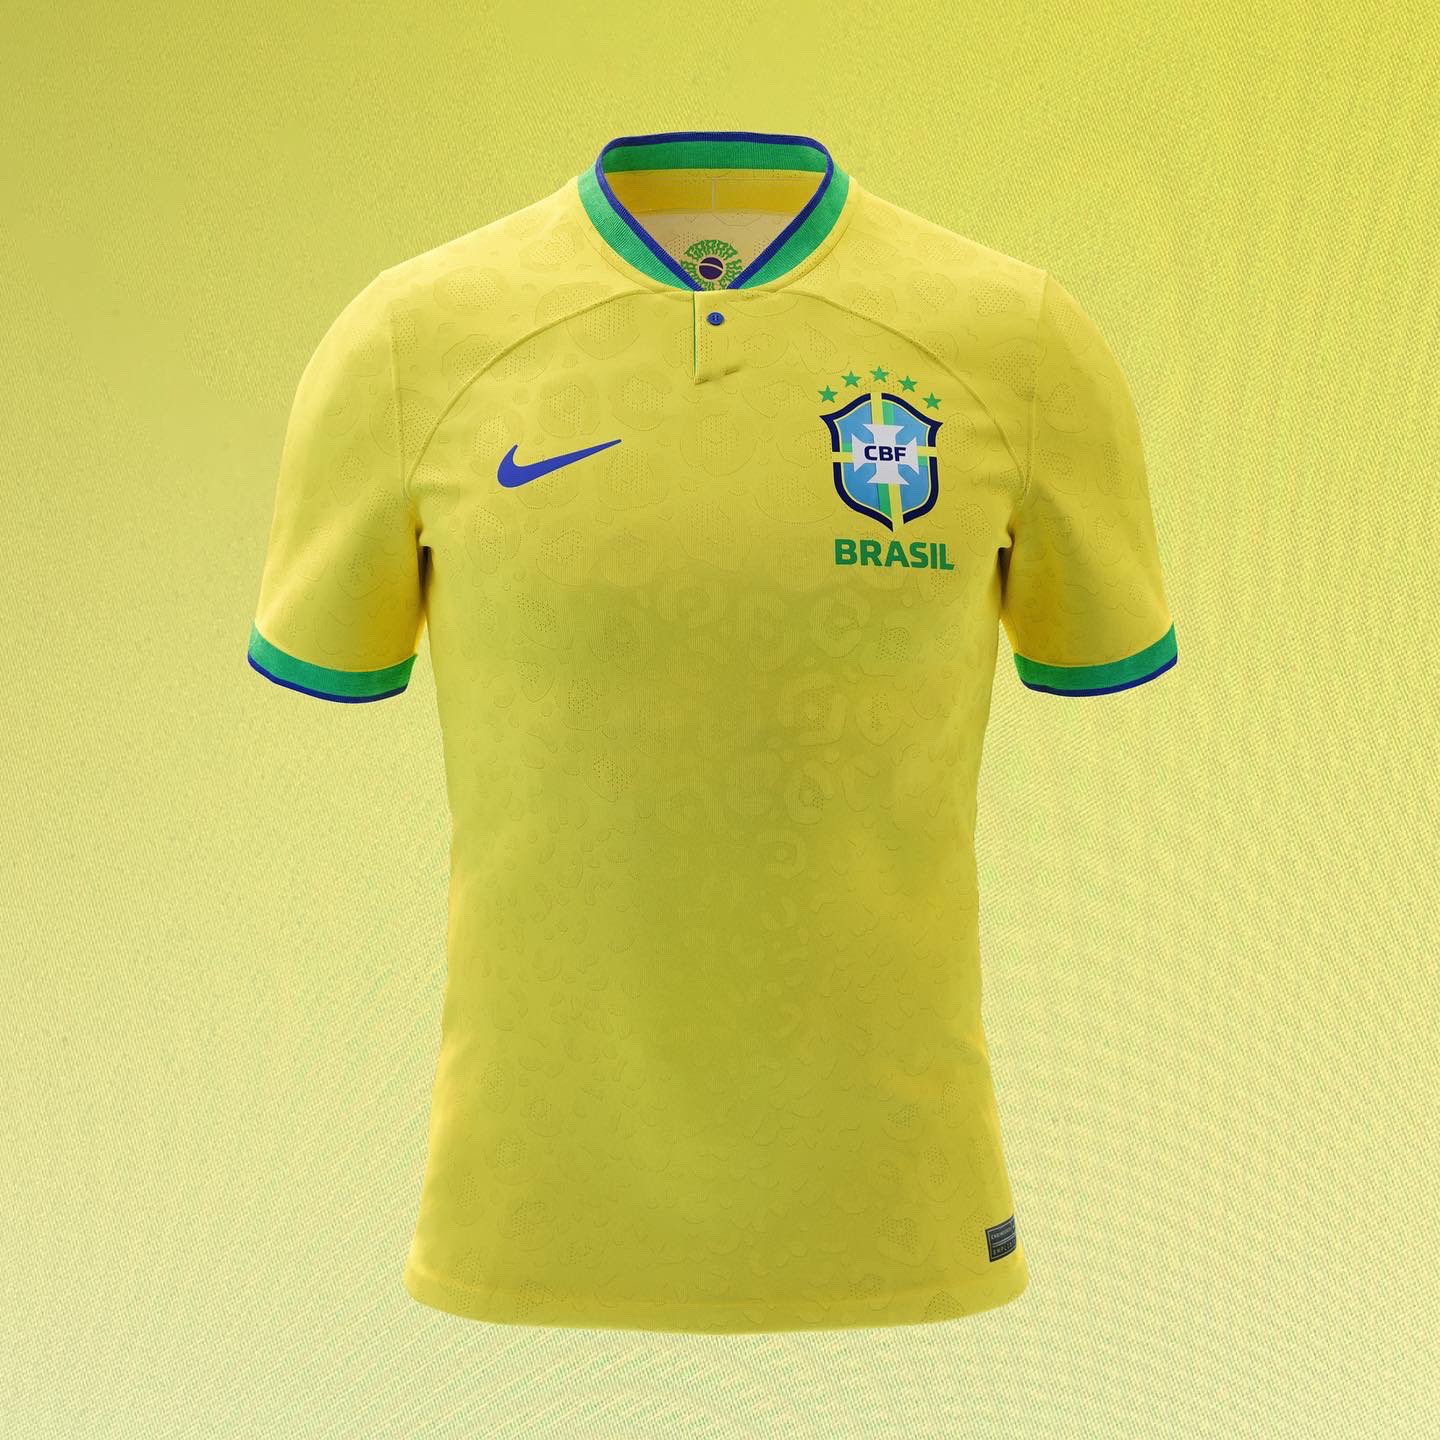 tonto resumen fábrica Todo Sobre Camisetas on Twitter: "🇧🇷 Brasil presentó sus camisetas  @nikefootball para el Mundial de Qatar 2022: https://t.co/SmdEUE1ydr  https://t.co/cYXuzbxuIw" / Twitter